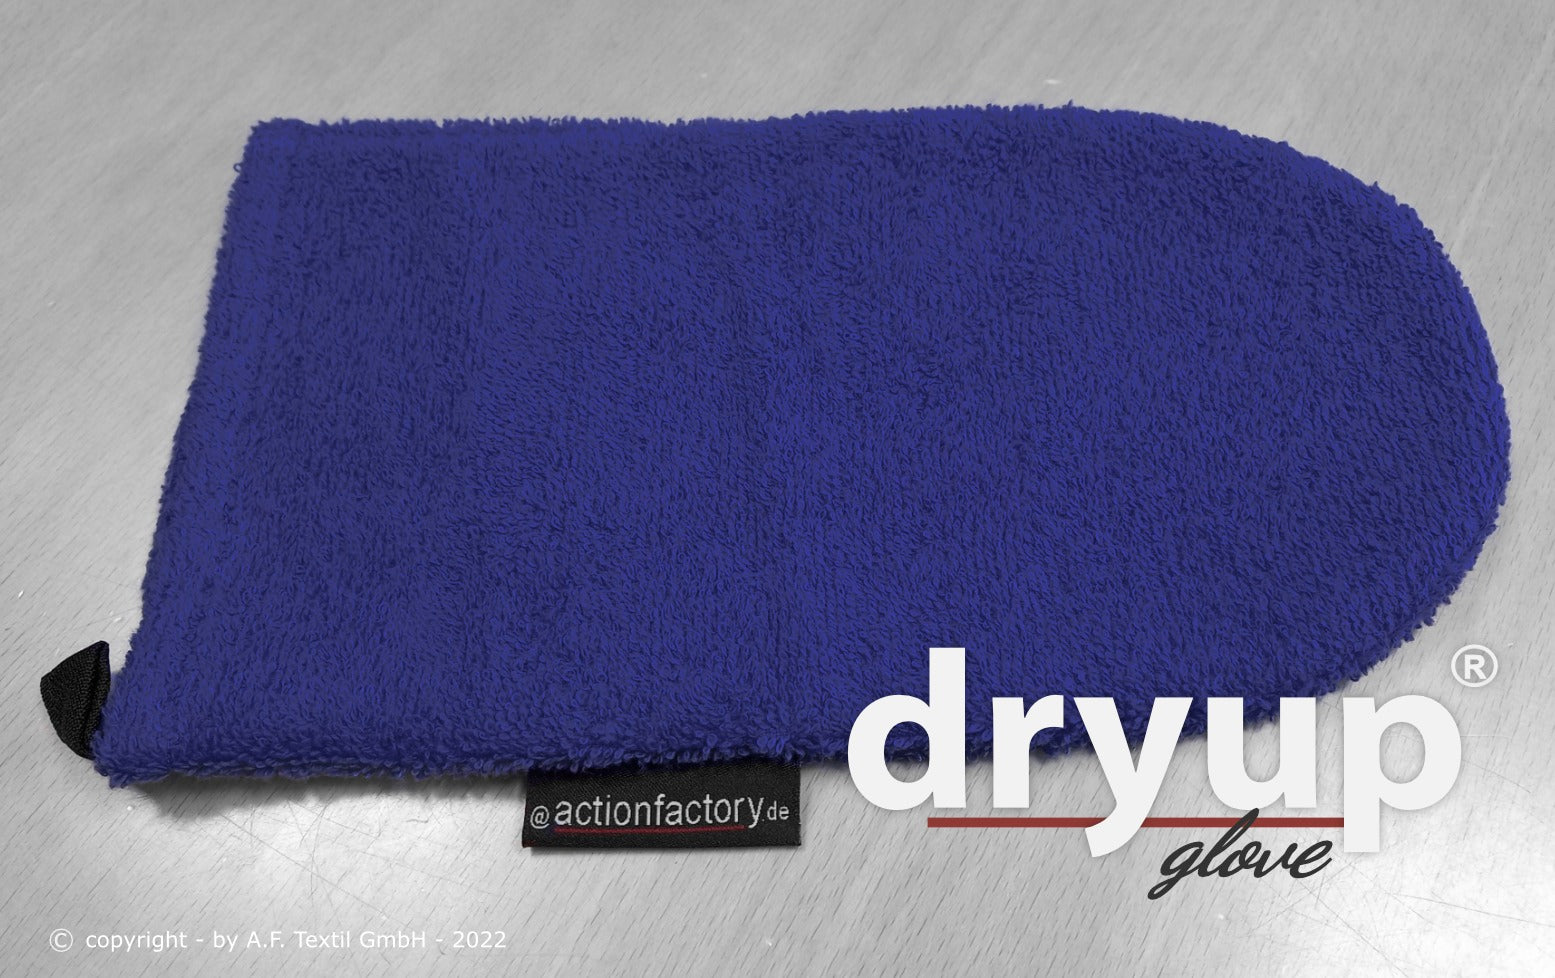 dryup Glove blau 1